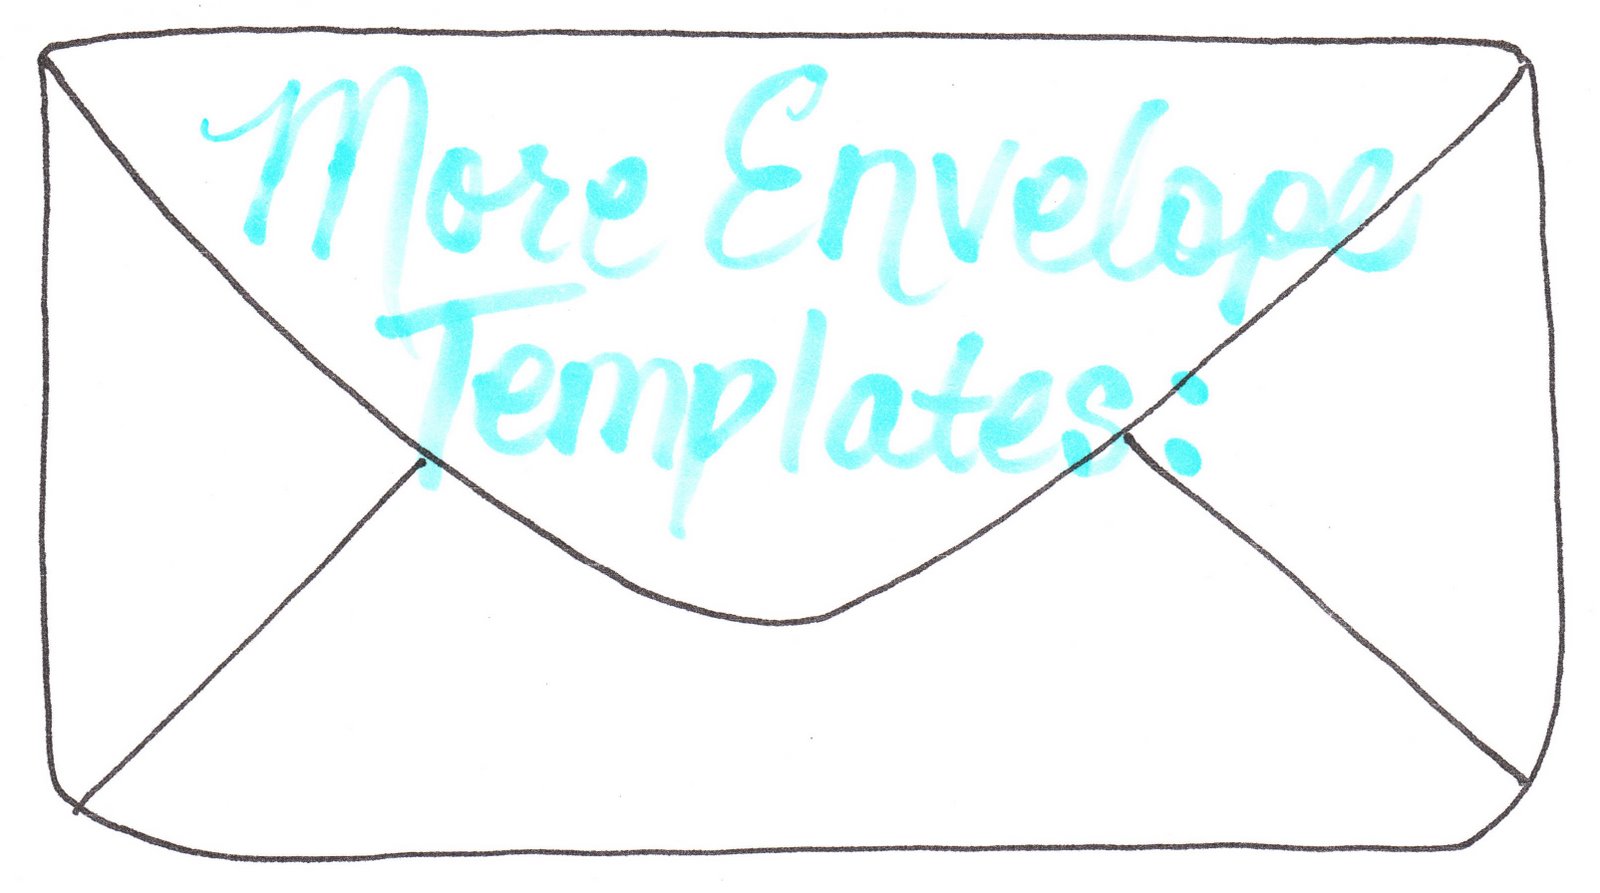 [more+envelope+templates.jpg]